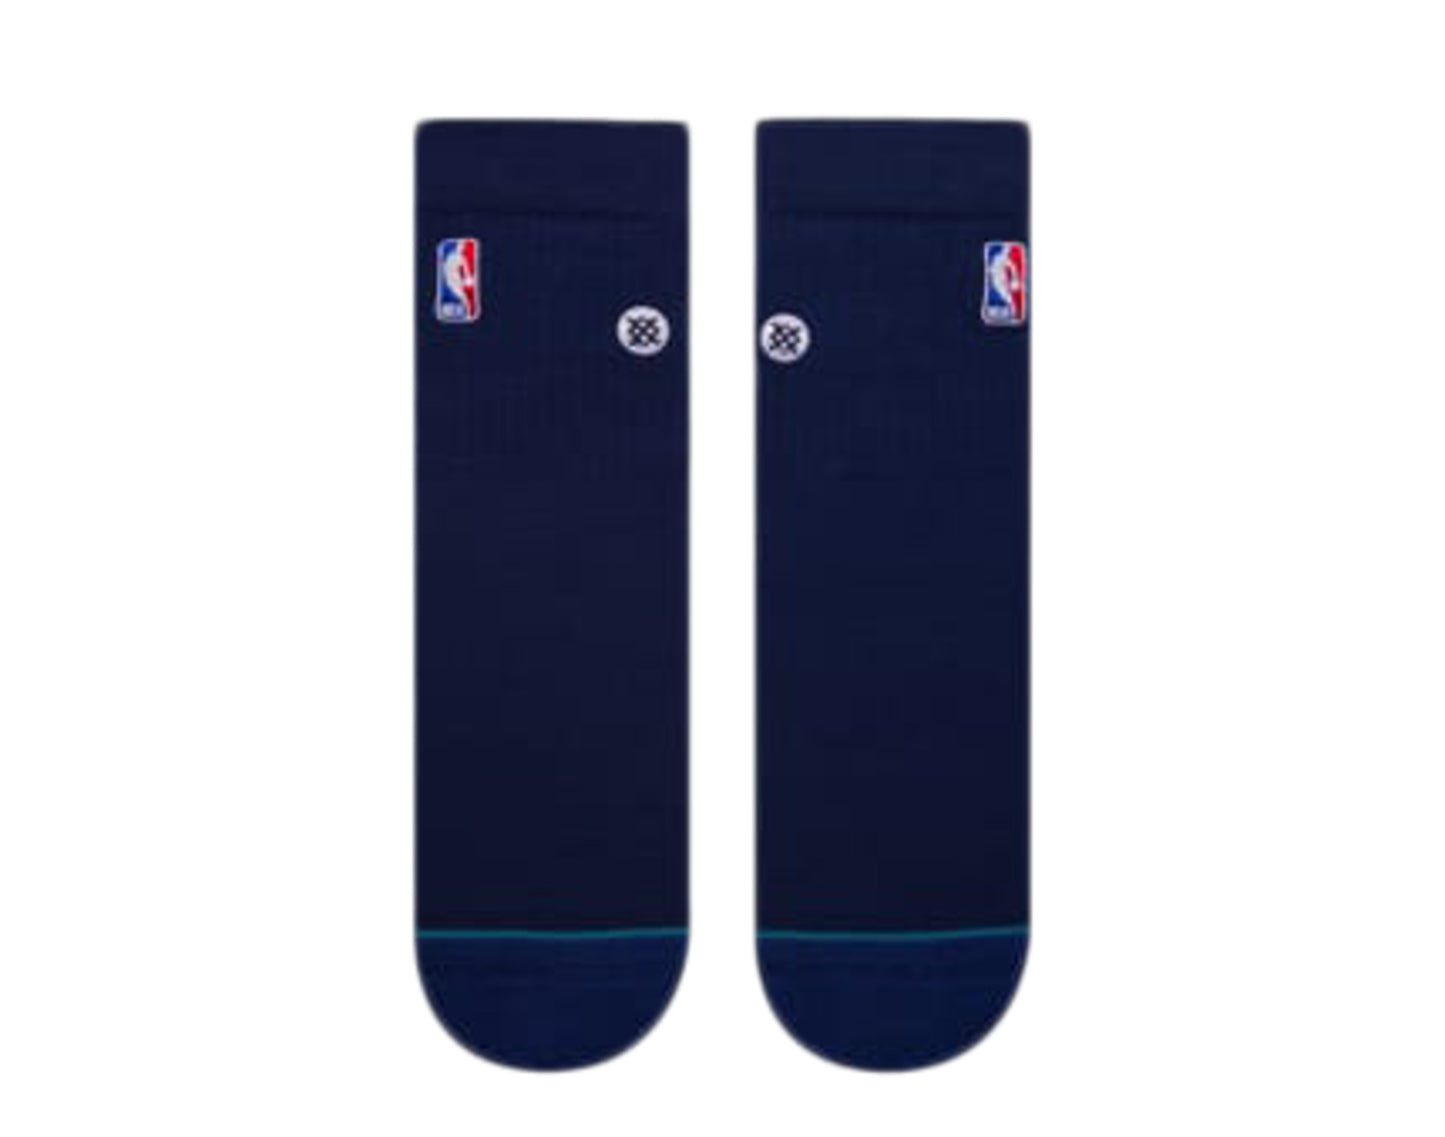 Stance Casual NBA Logoman QTR Navy Blue Ankle Socks M356D17LOG-NVY